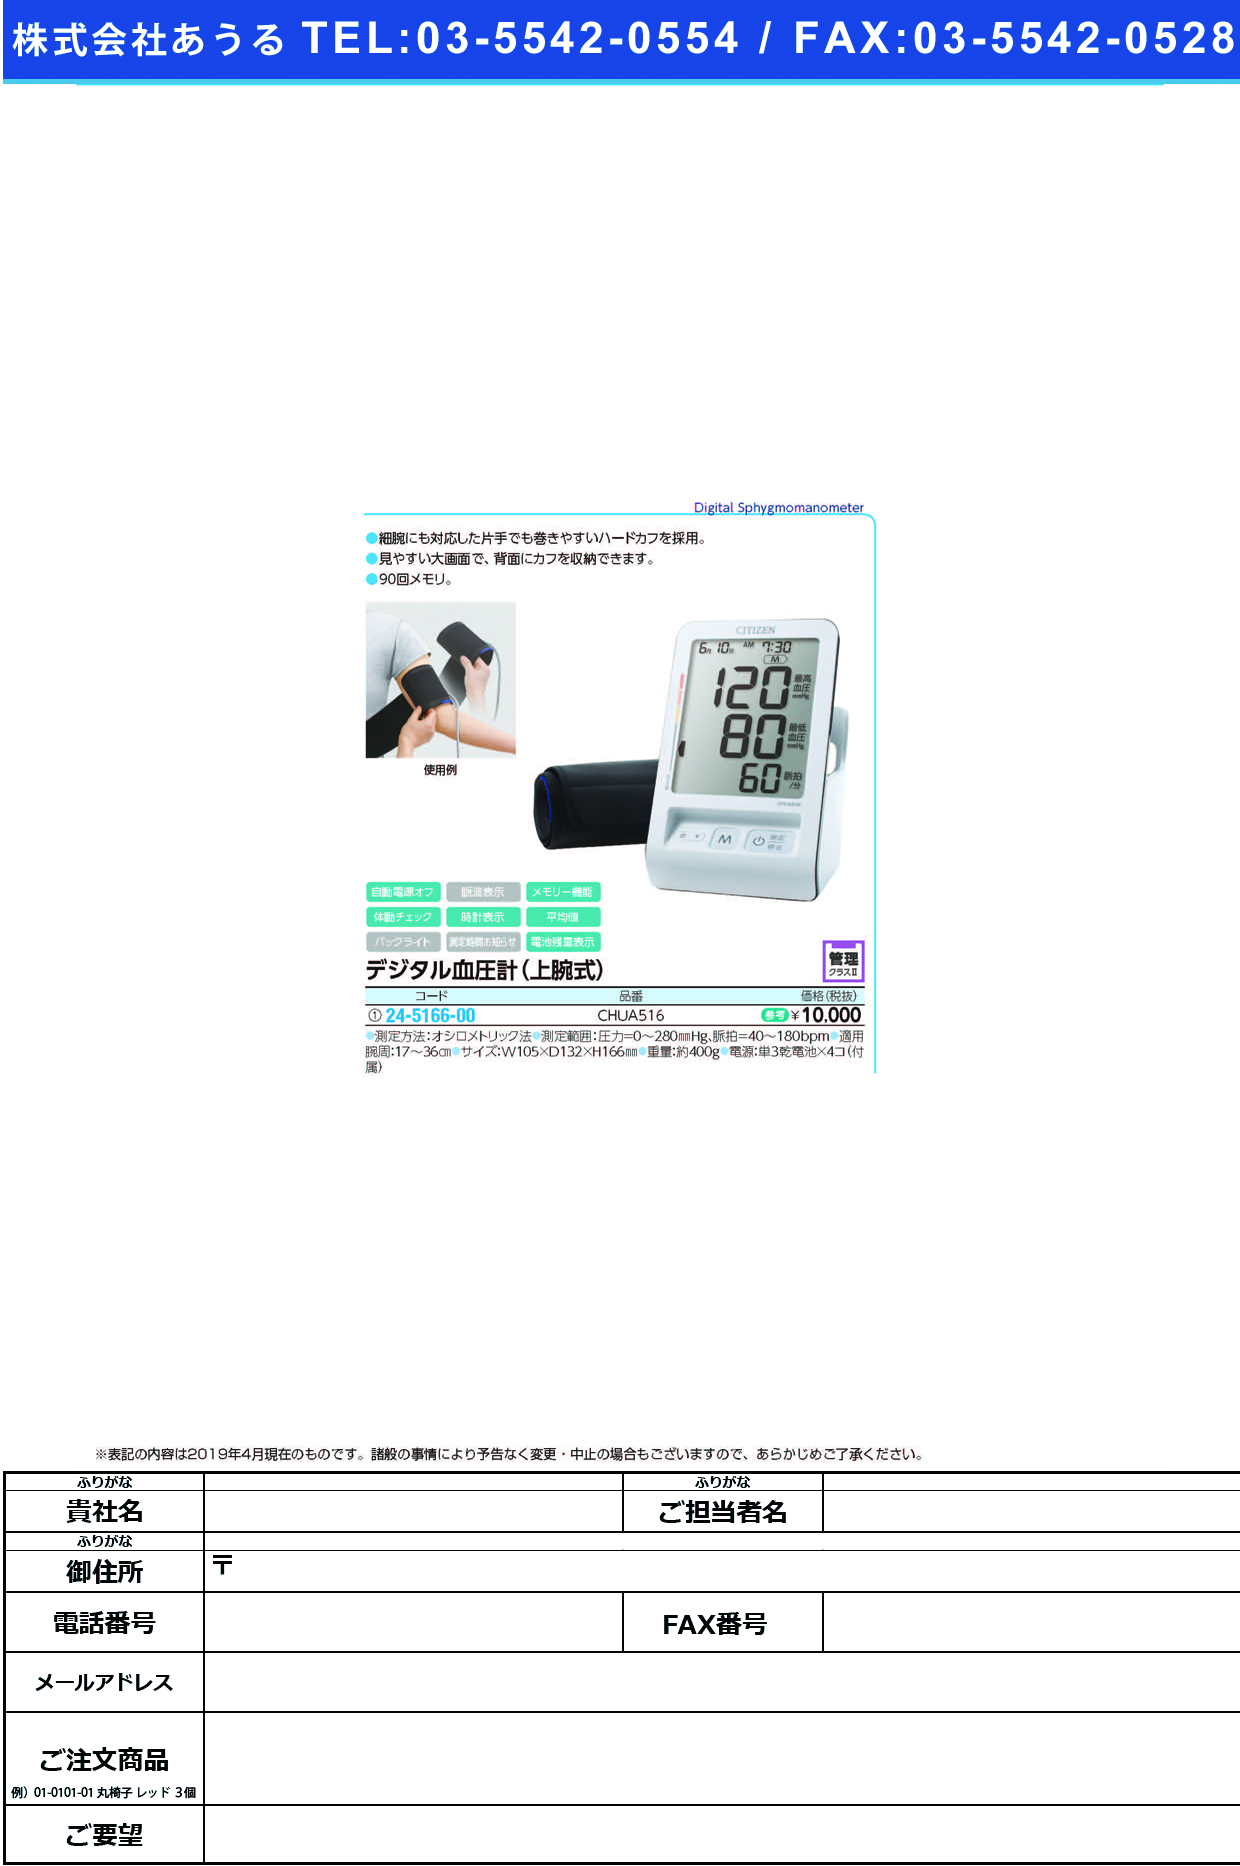 (24-5166-00)シチズン電子血圧計（上腕式） CHUA516 ｼﾁｽﾞﾝﾃﾞﾝｼｹﾂｱﾂｹｲ(ｼﾞｮｳ【1台単位】【2019年カタログ商品】